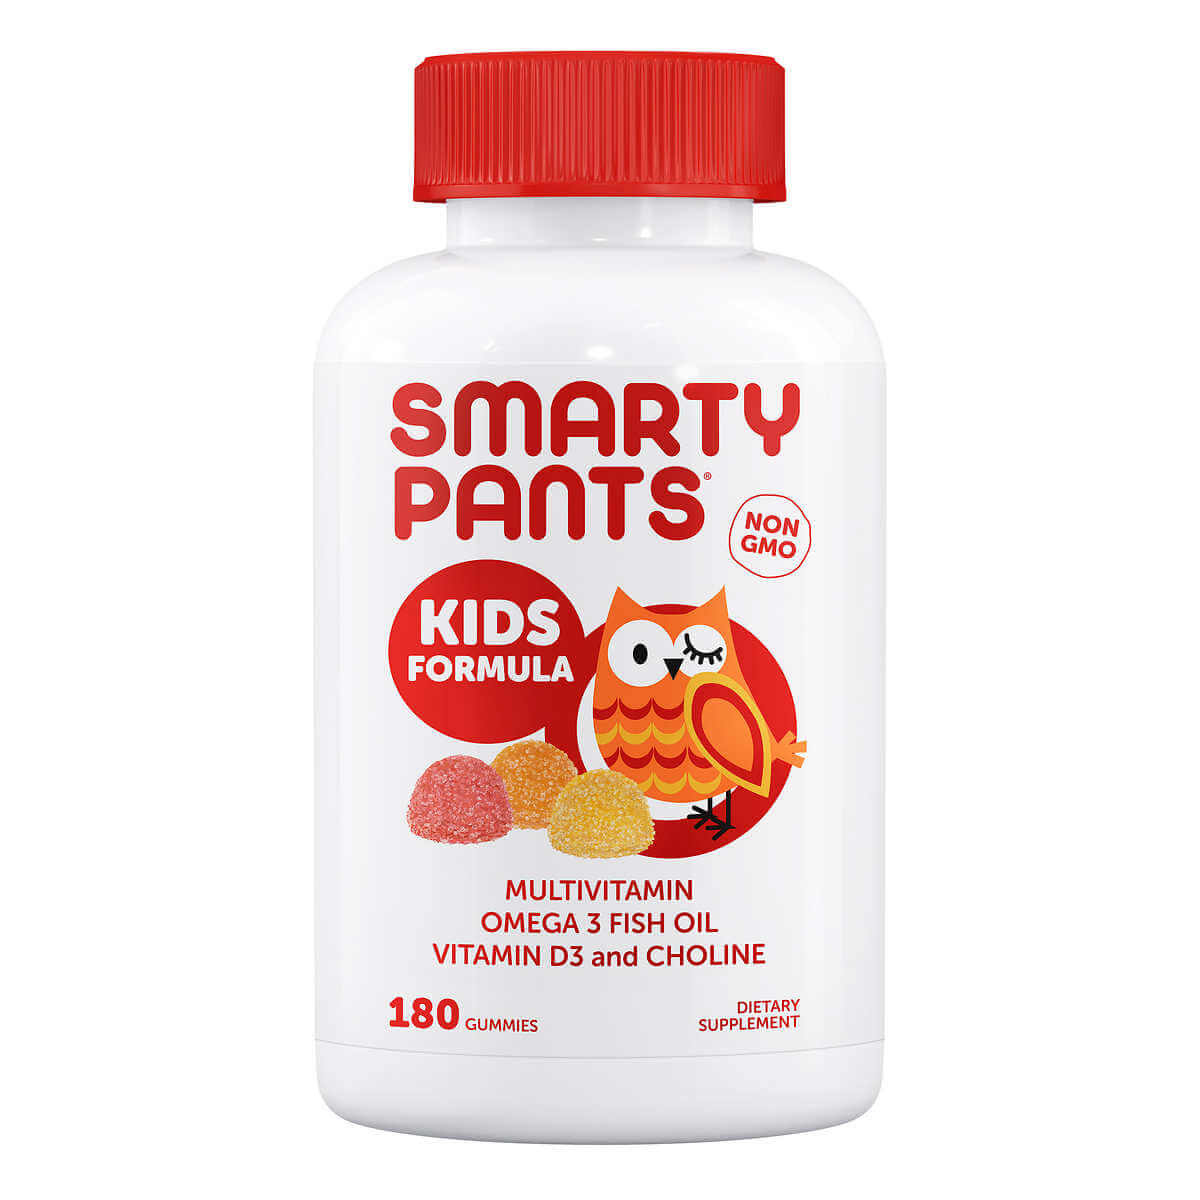 SmartyPants Kids Formula Multivitamin - 180 Gummies